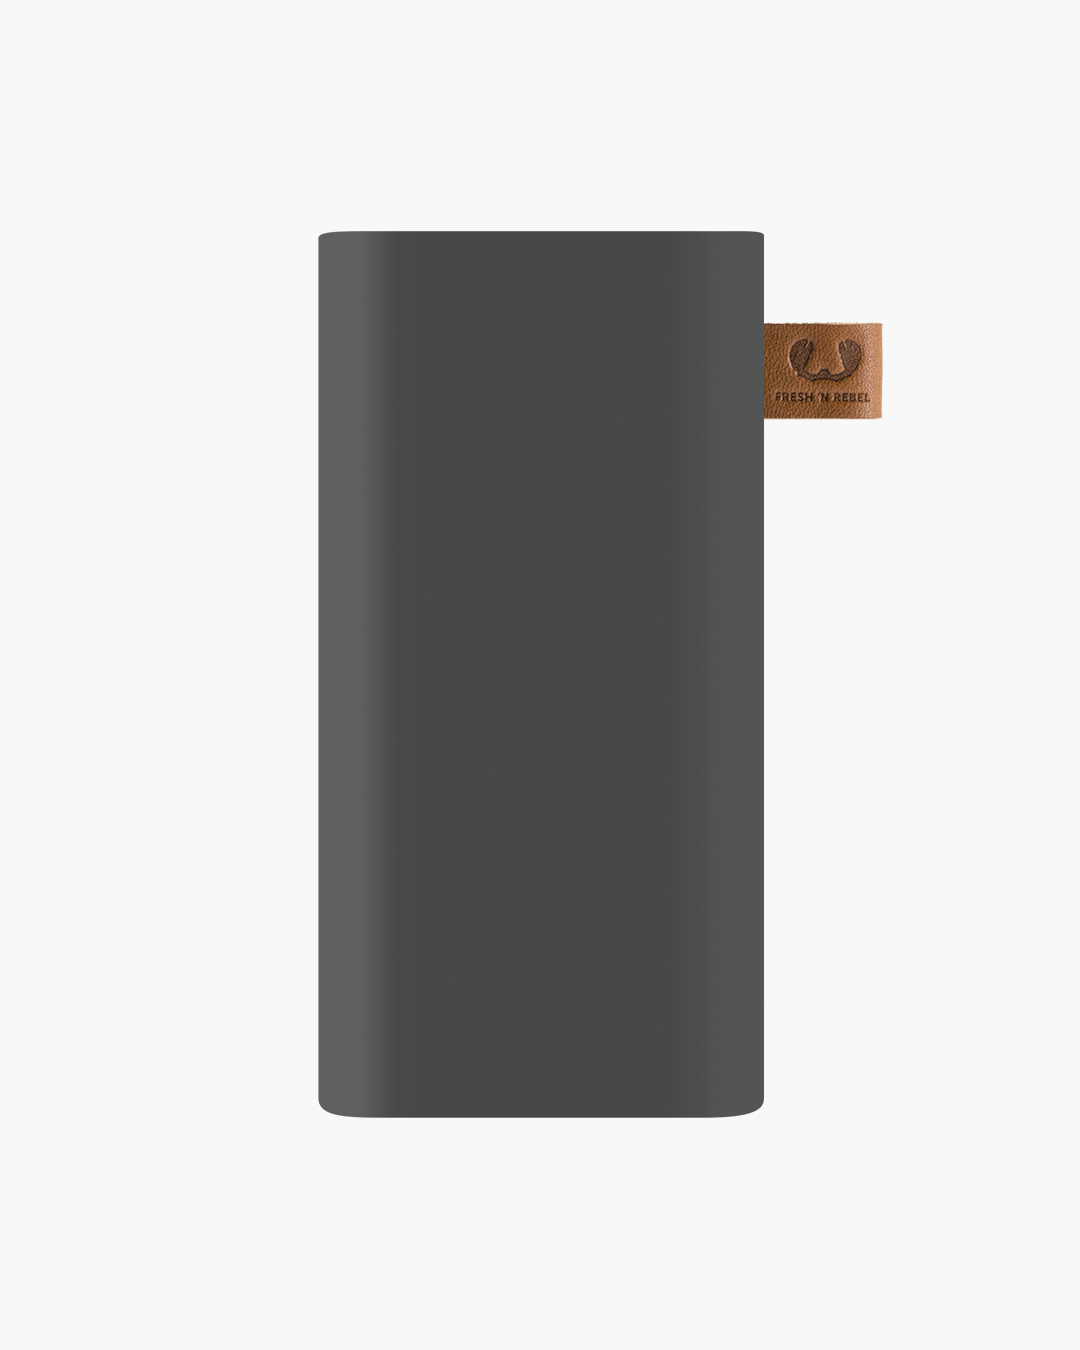 Fresh 'n Rebel - Powerbank 6000 mAh USB-C - Storm Grey